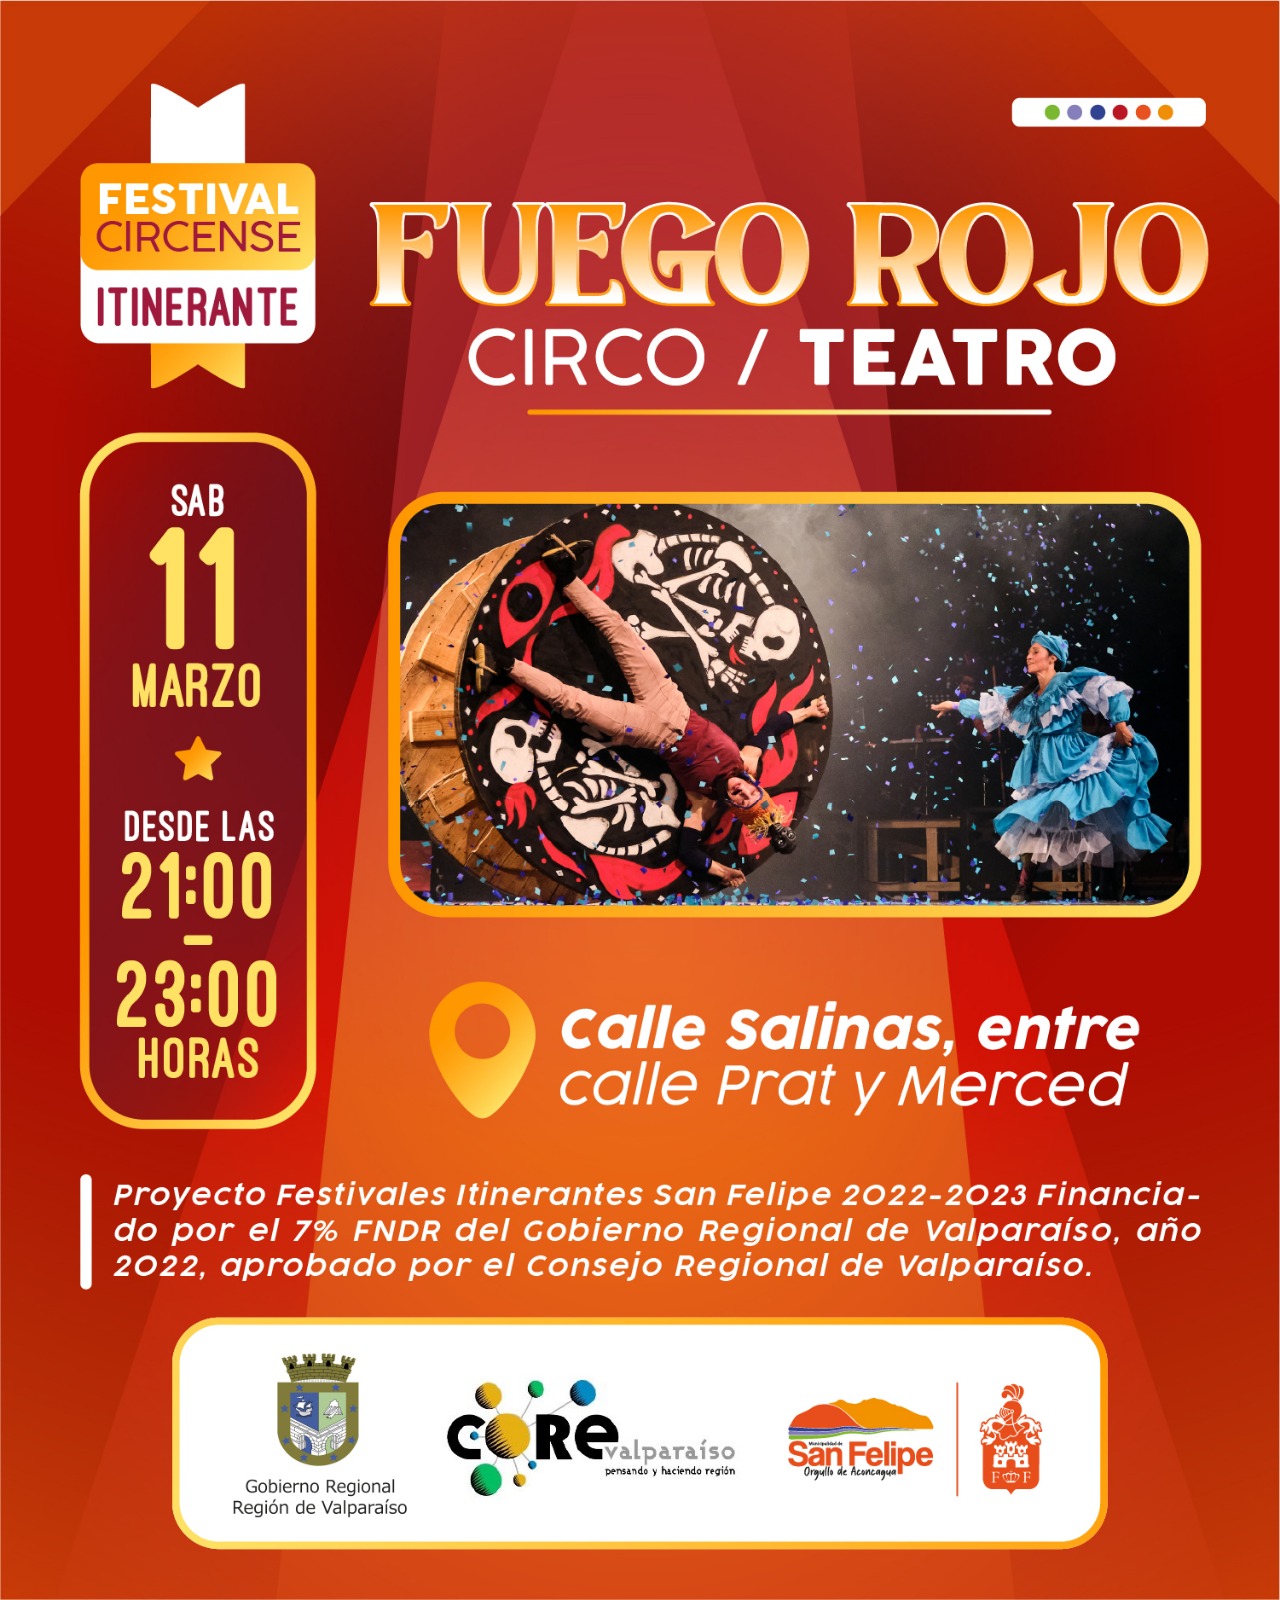 Festival circense dará show gratuito en San Felipe